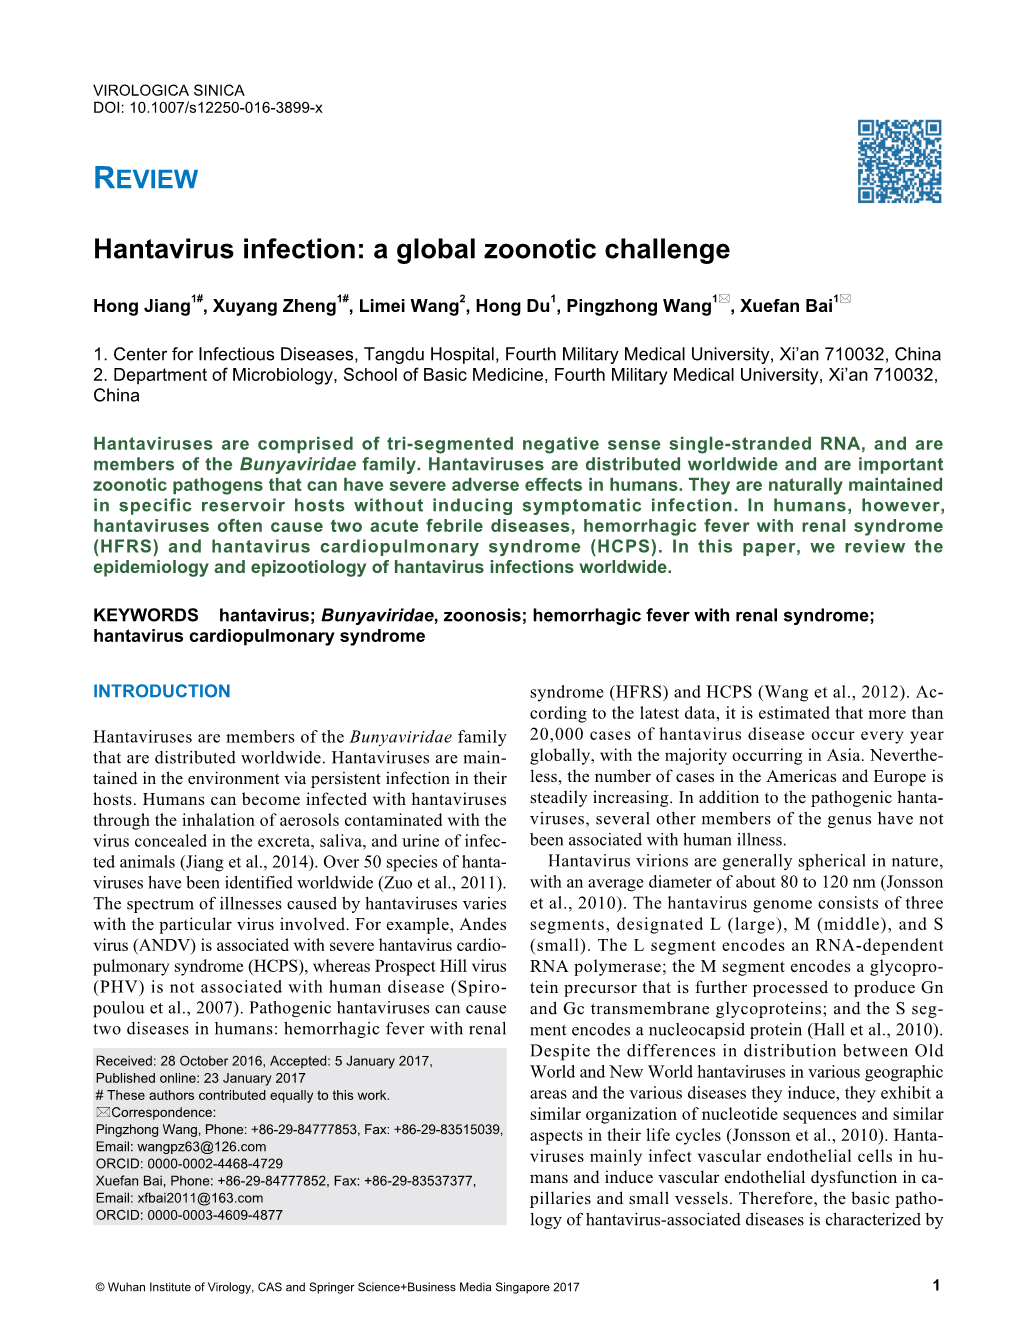 Hantavirus Infection: a Global Zoonotic Challenge